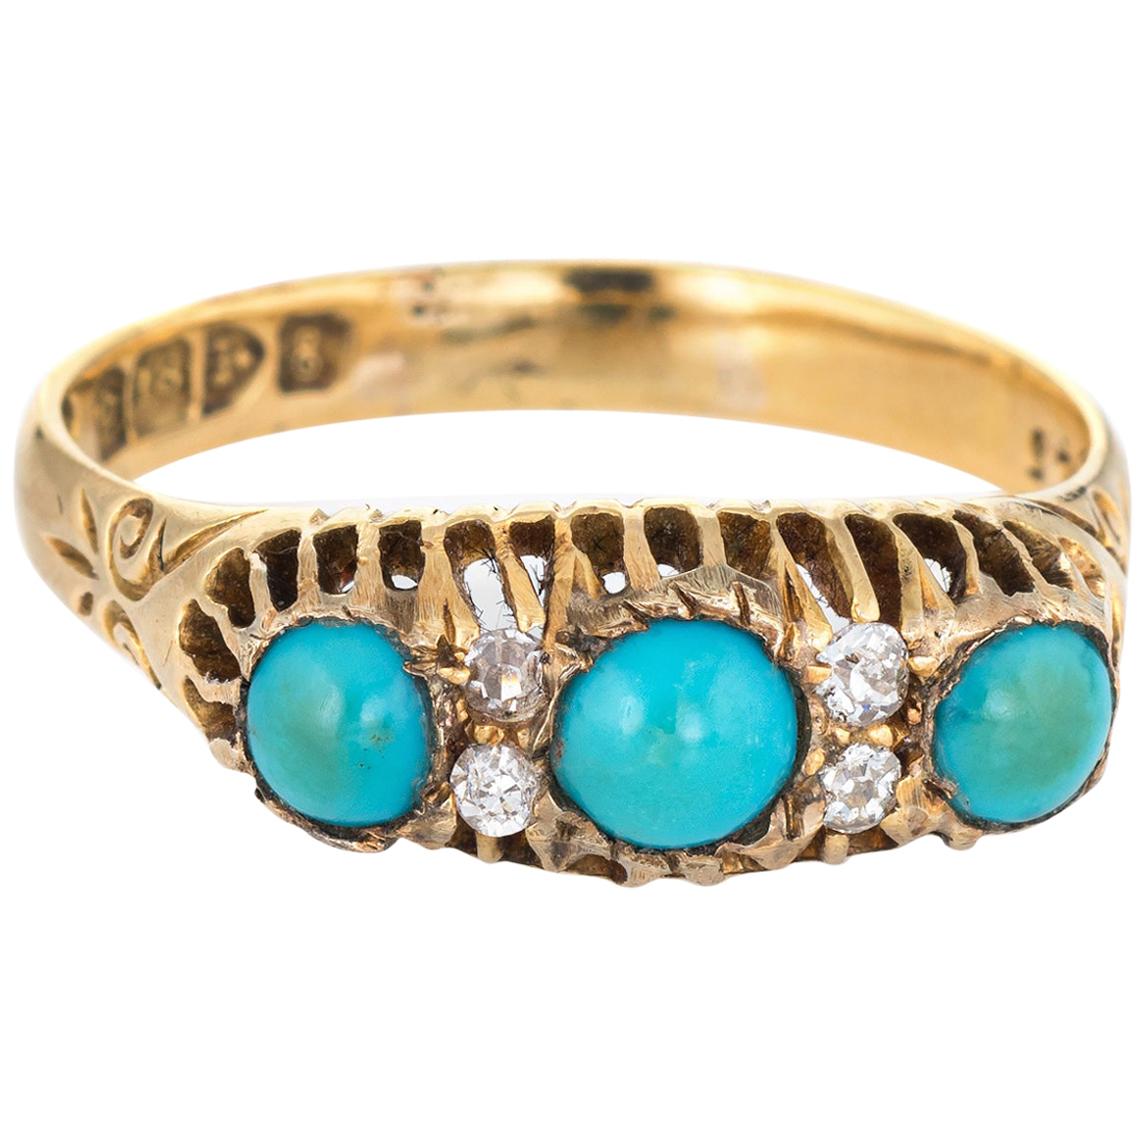 Antique Edwardian Turquoise Diamond Ring 18 Karat Yellow Gold Bridge Chester UK